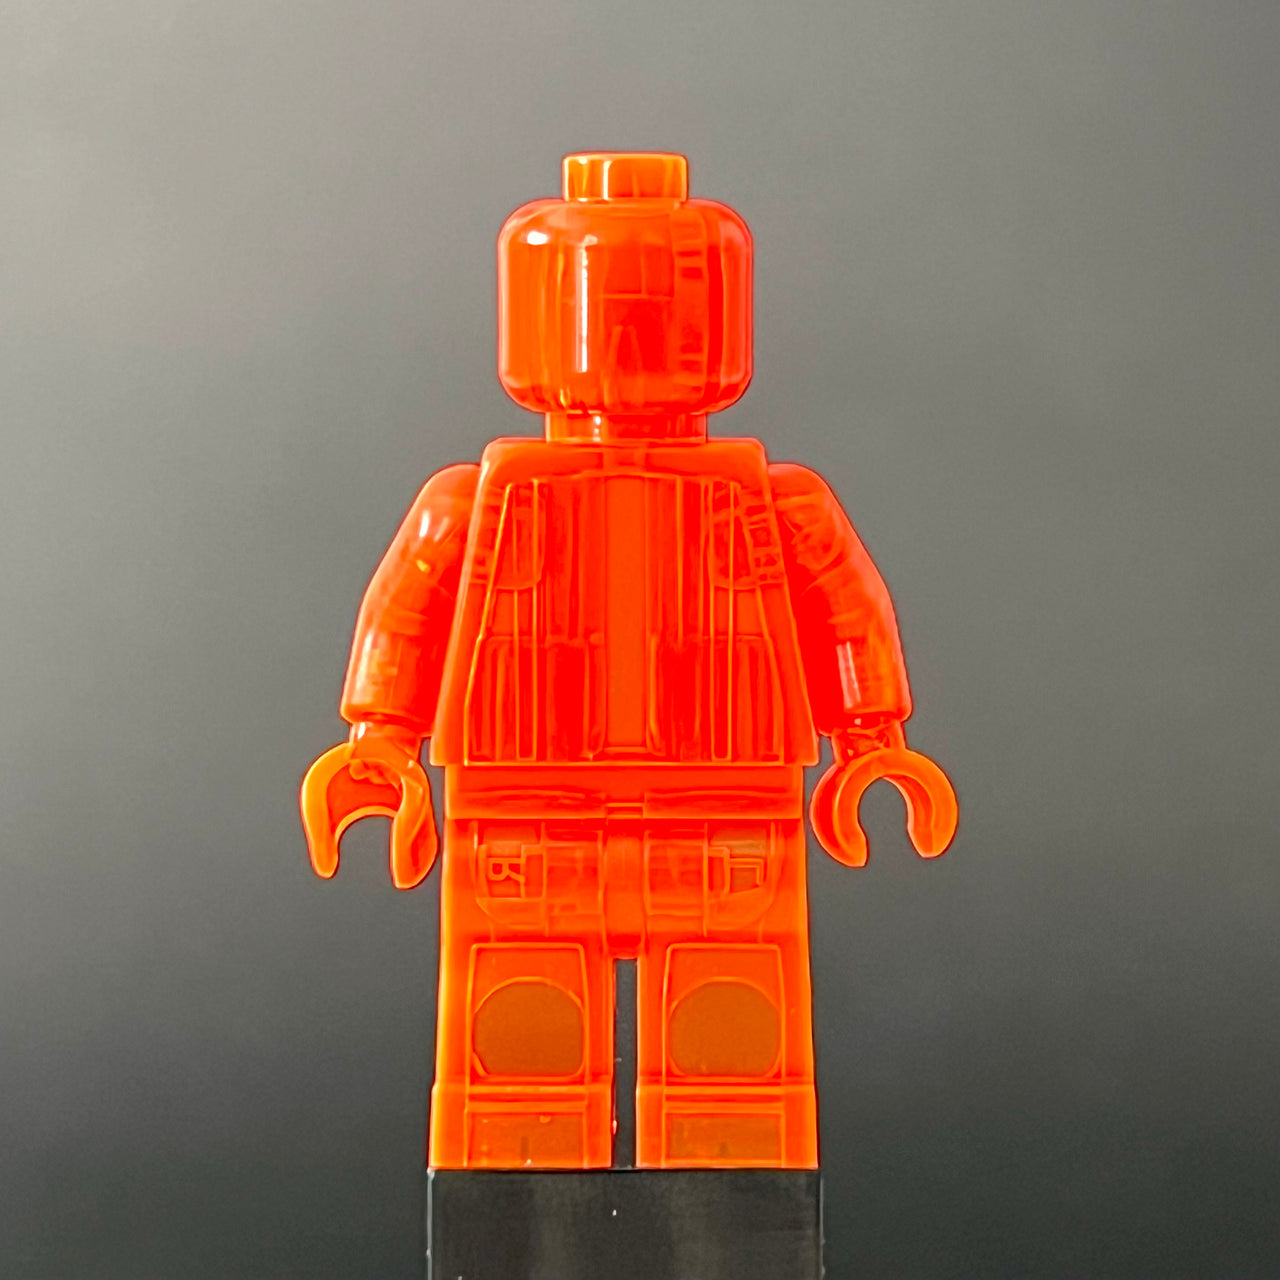 Trans-Neon Orange Monochrome Figure